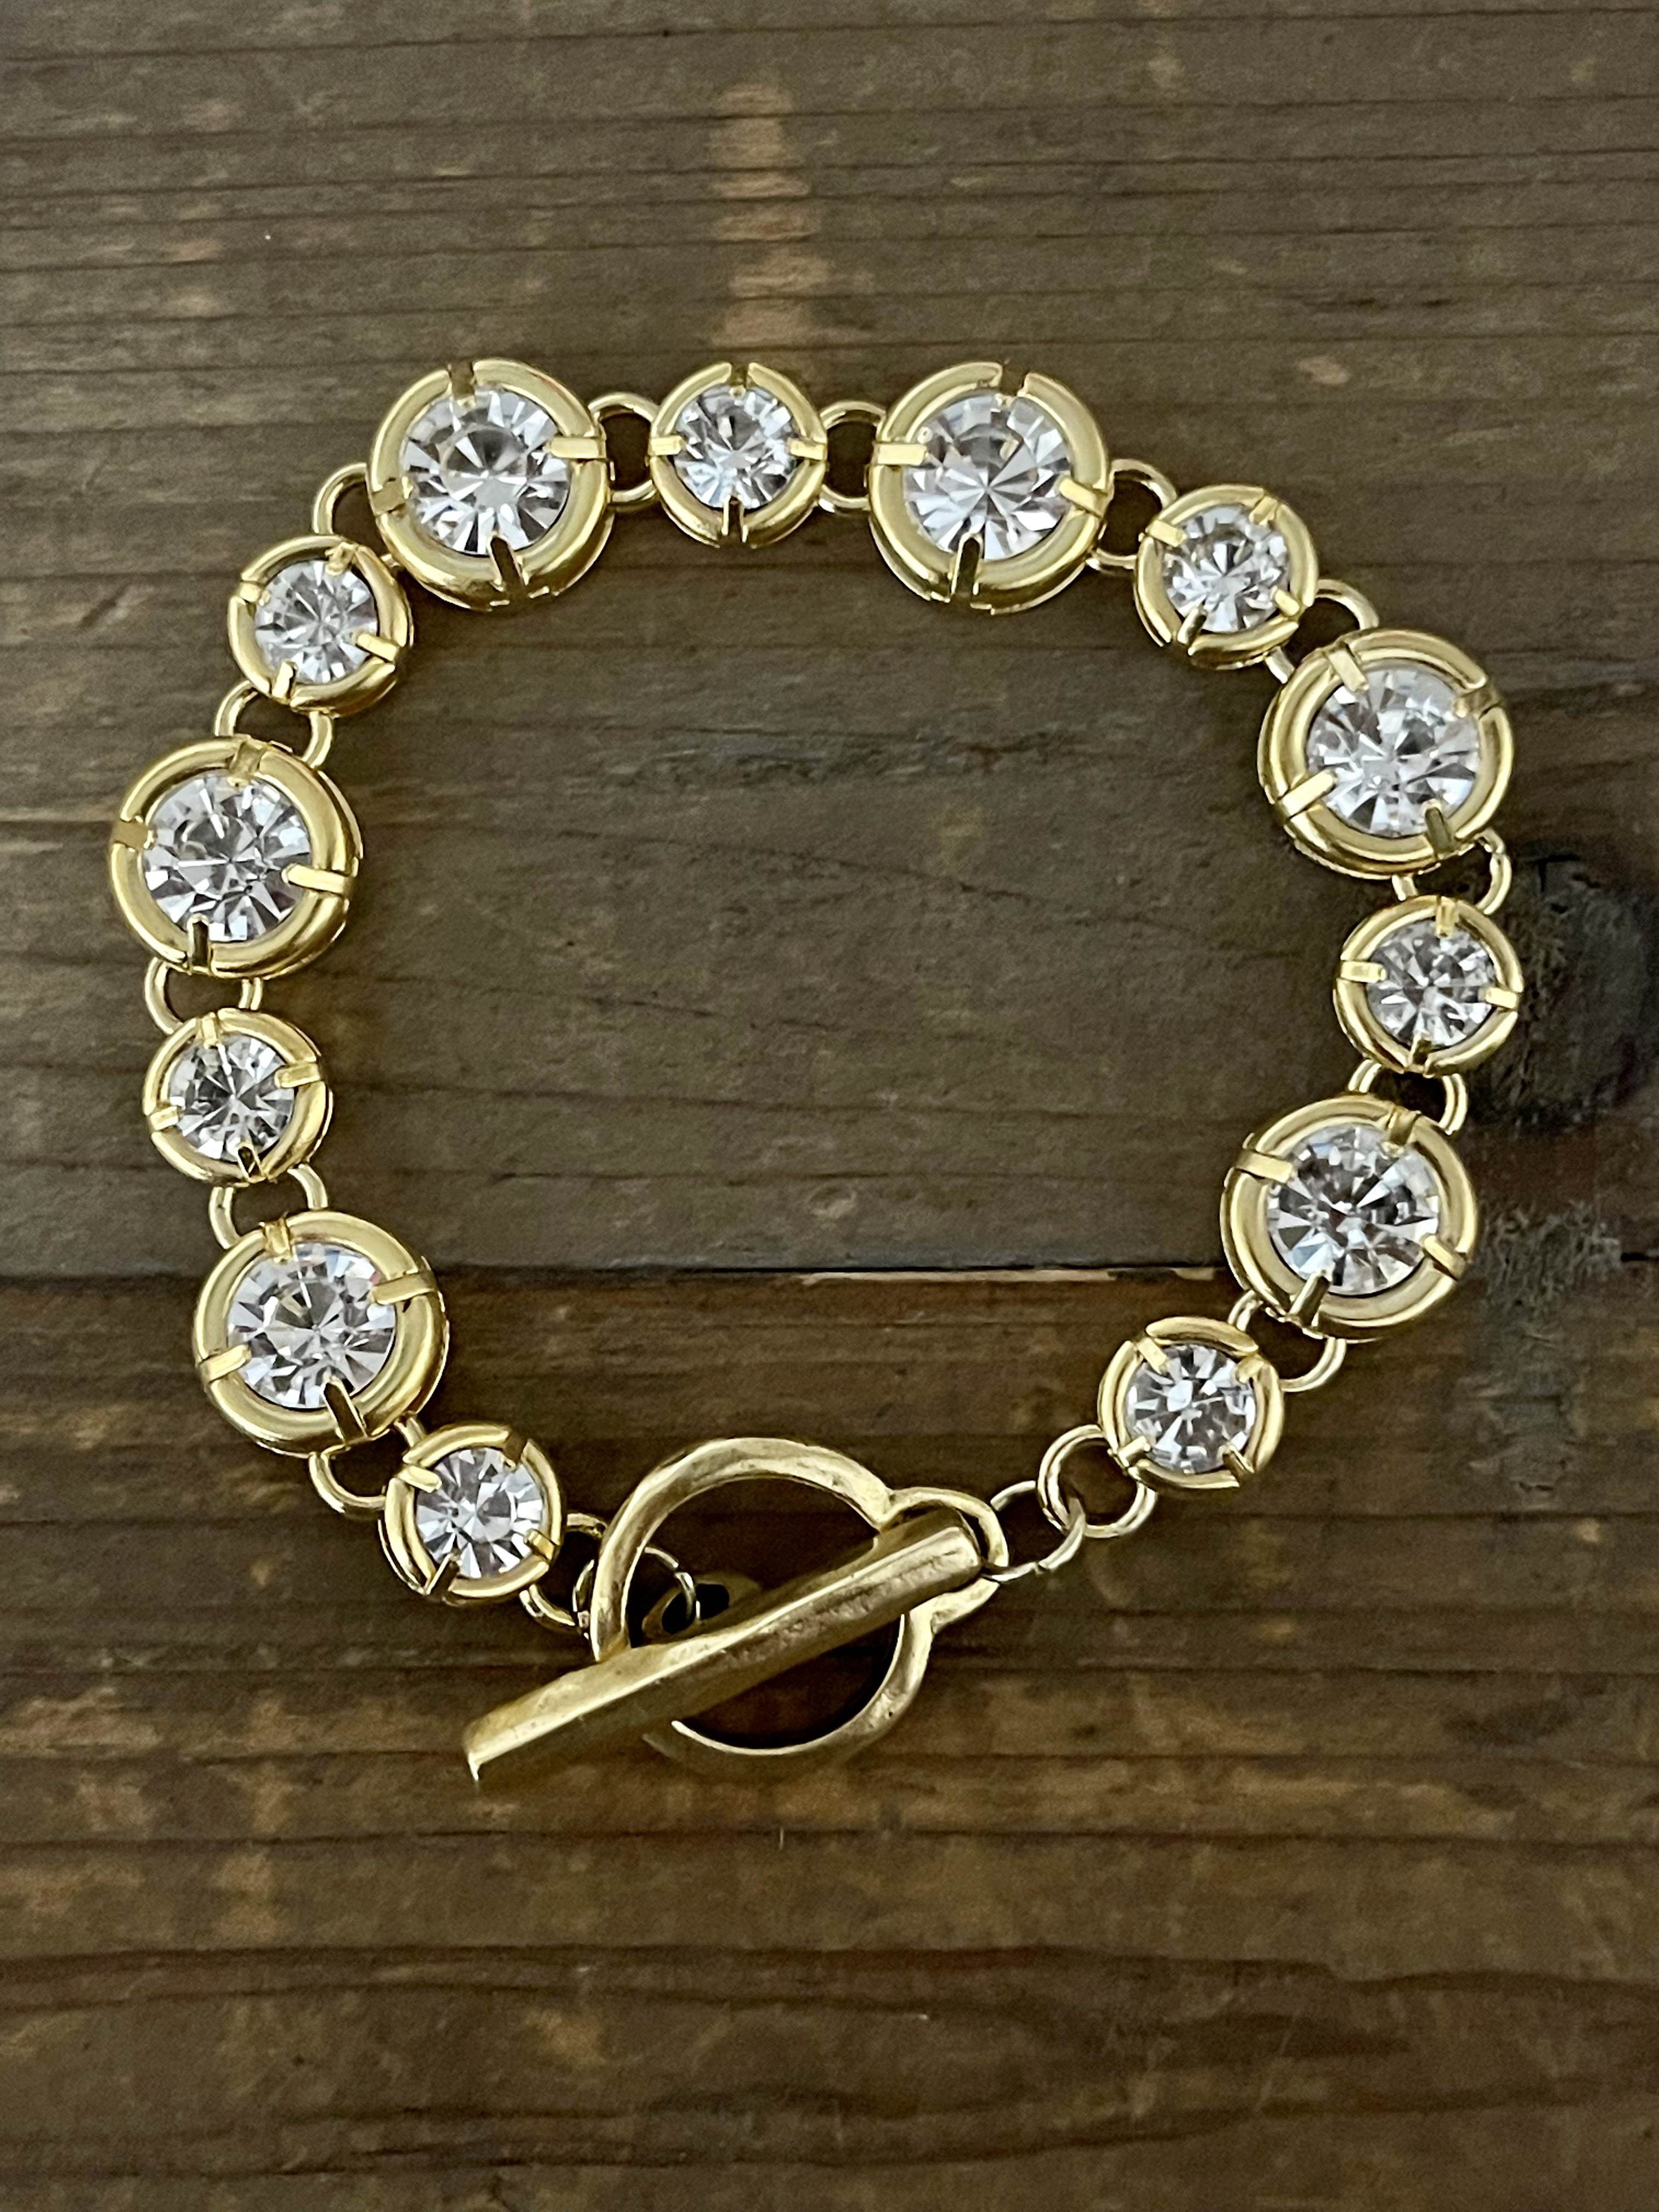 Gold Plated & Swarovski Crystal Bracelet 7.5" With Toggle Closure